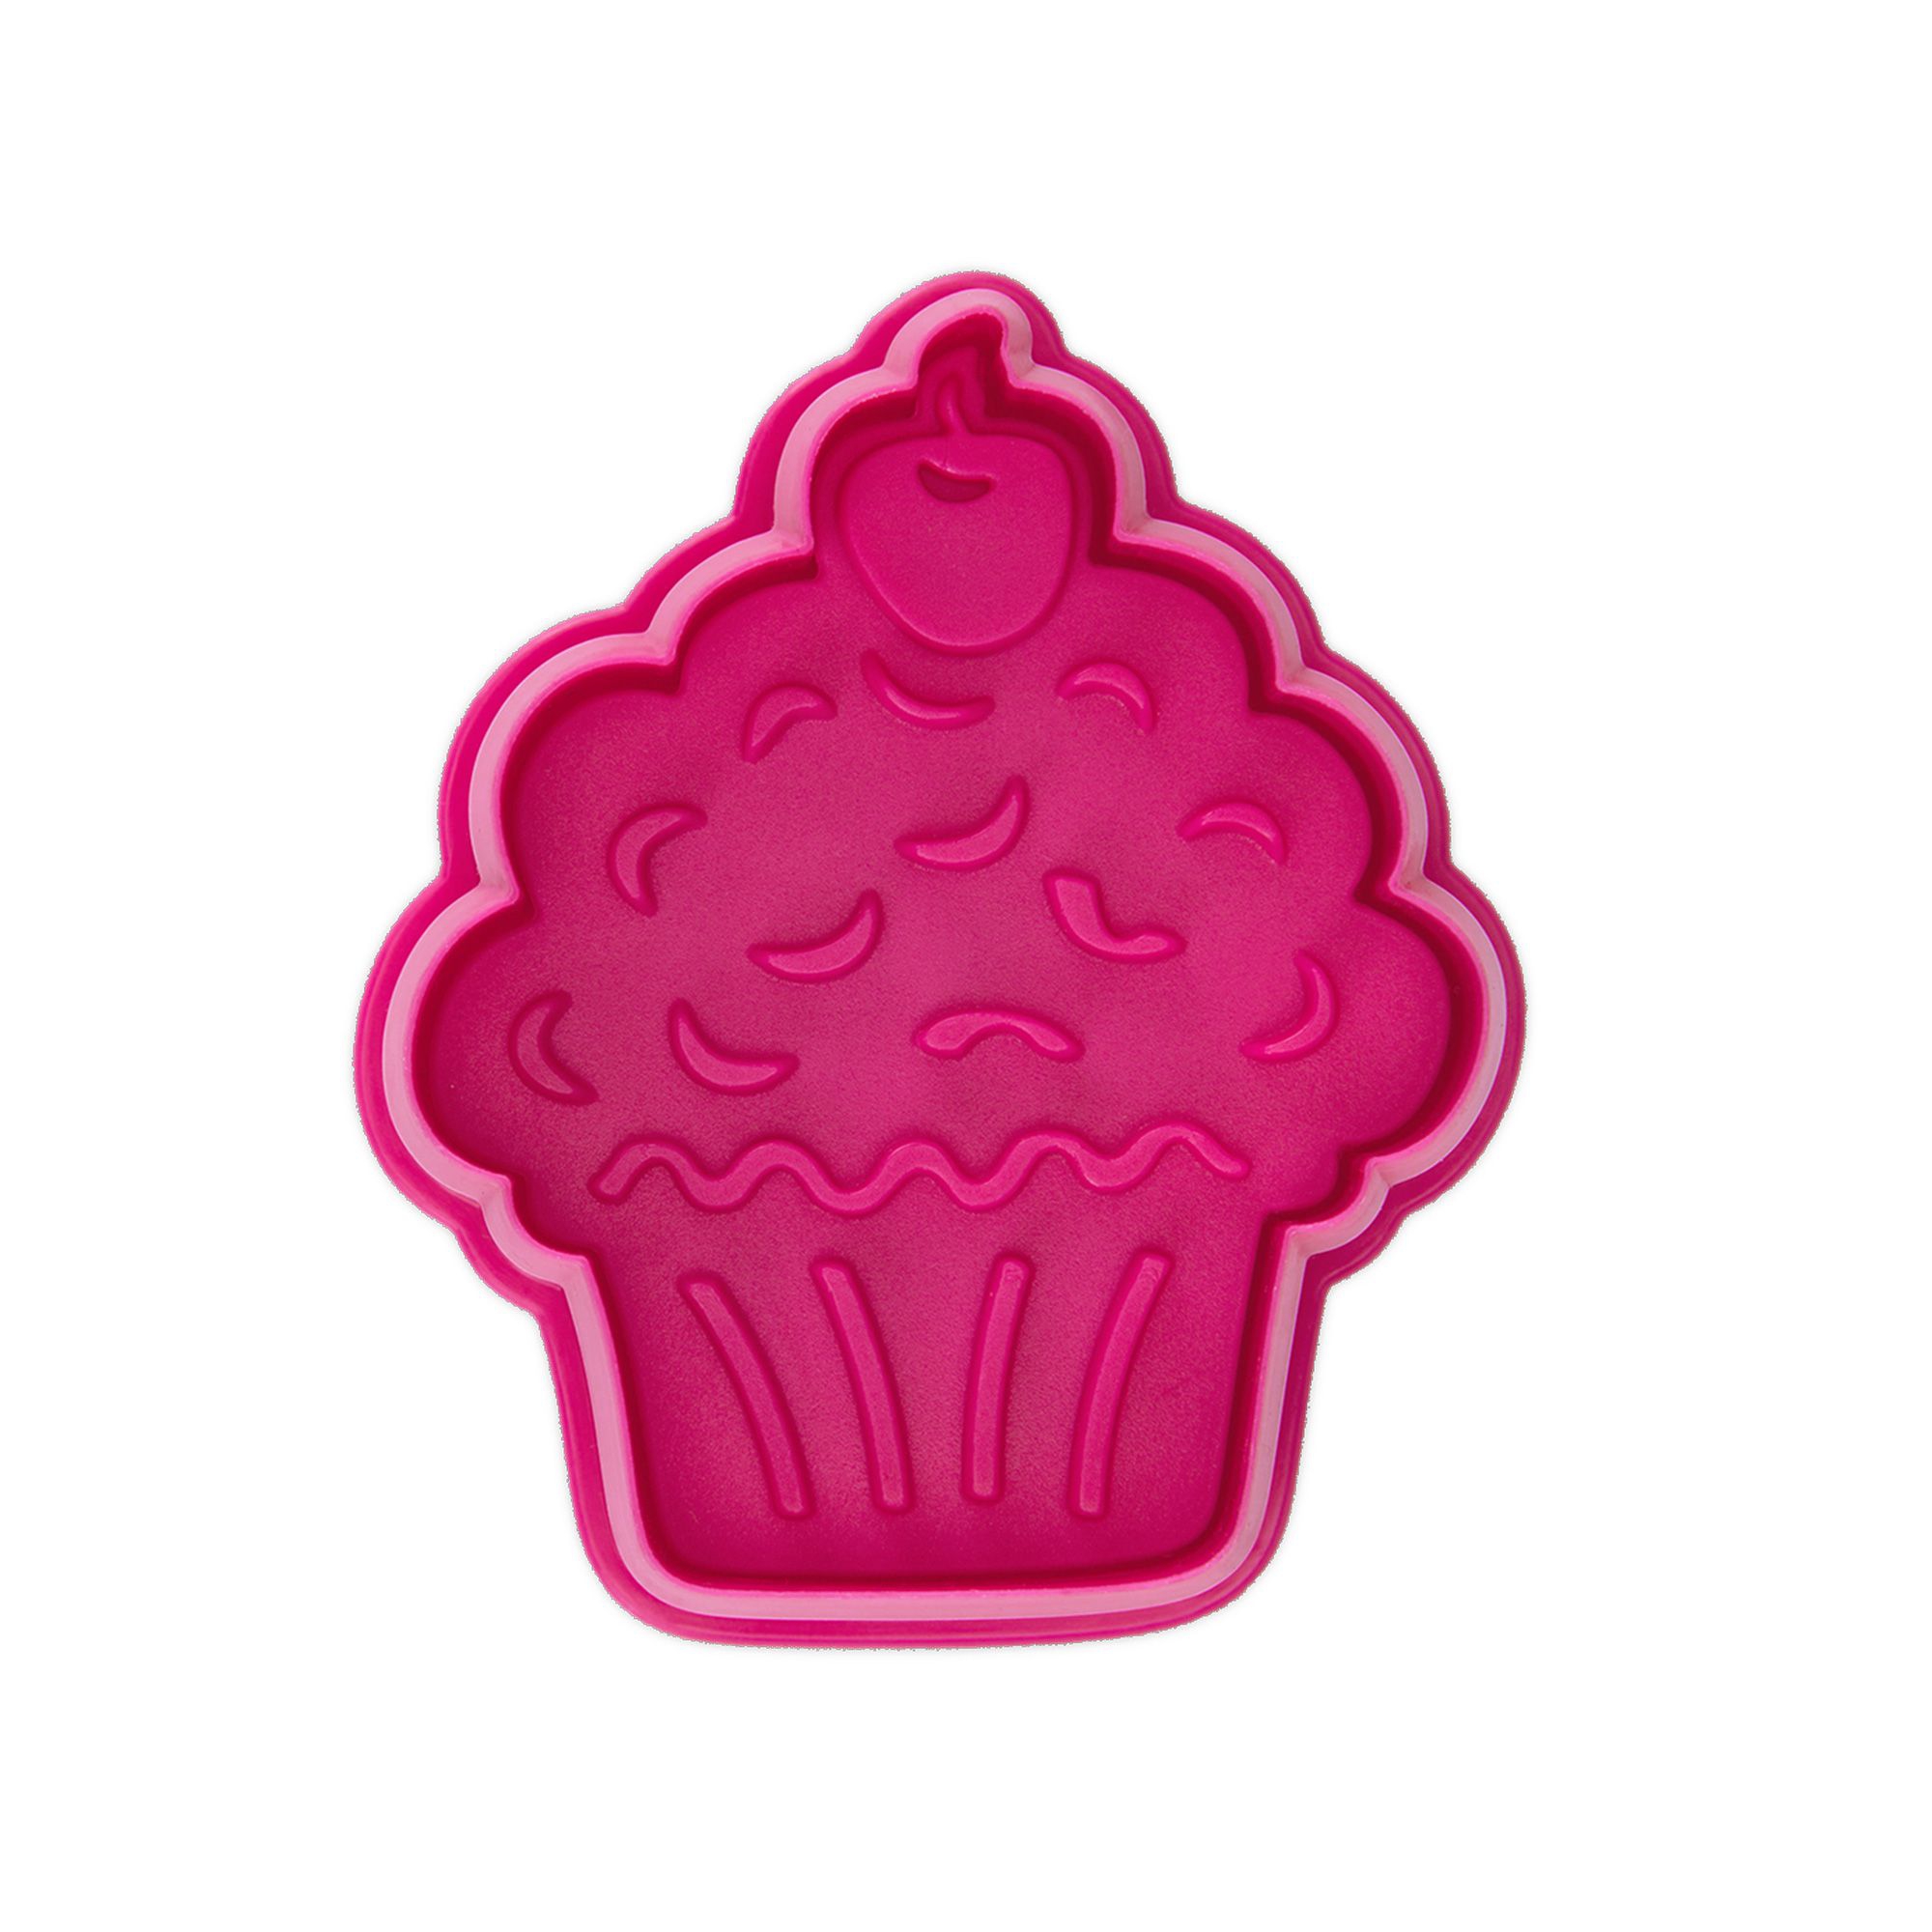 Städter - Ausstecher Muffin 6 cm - Pink